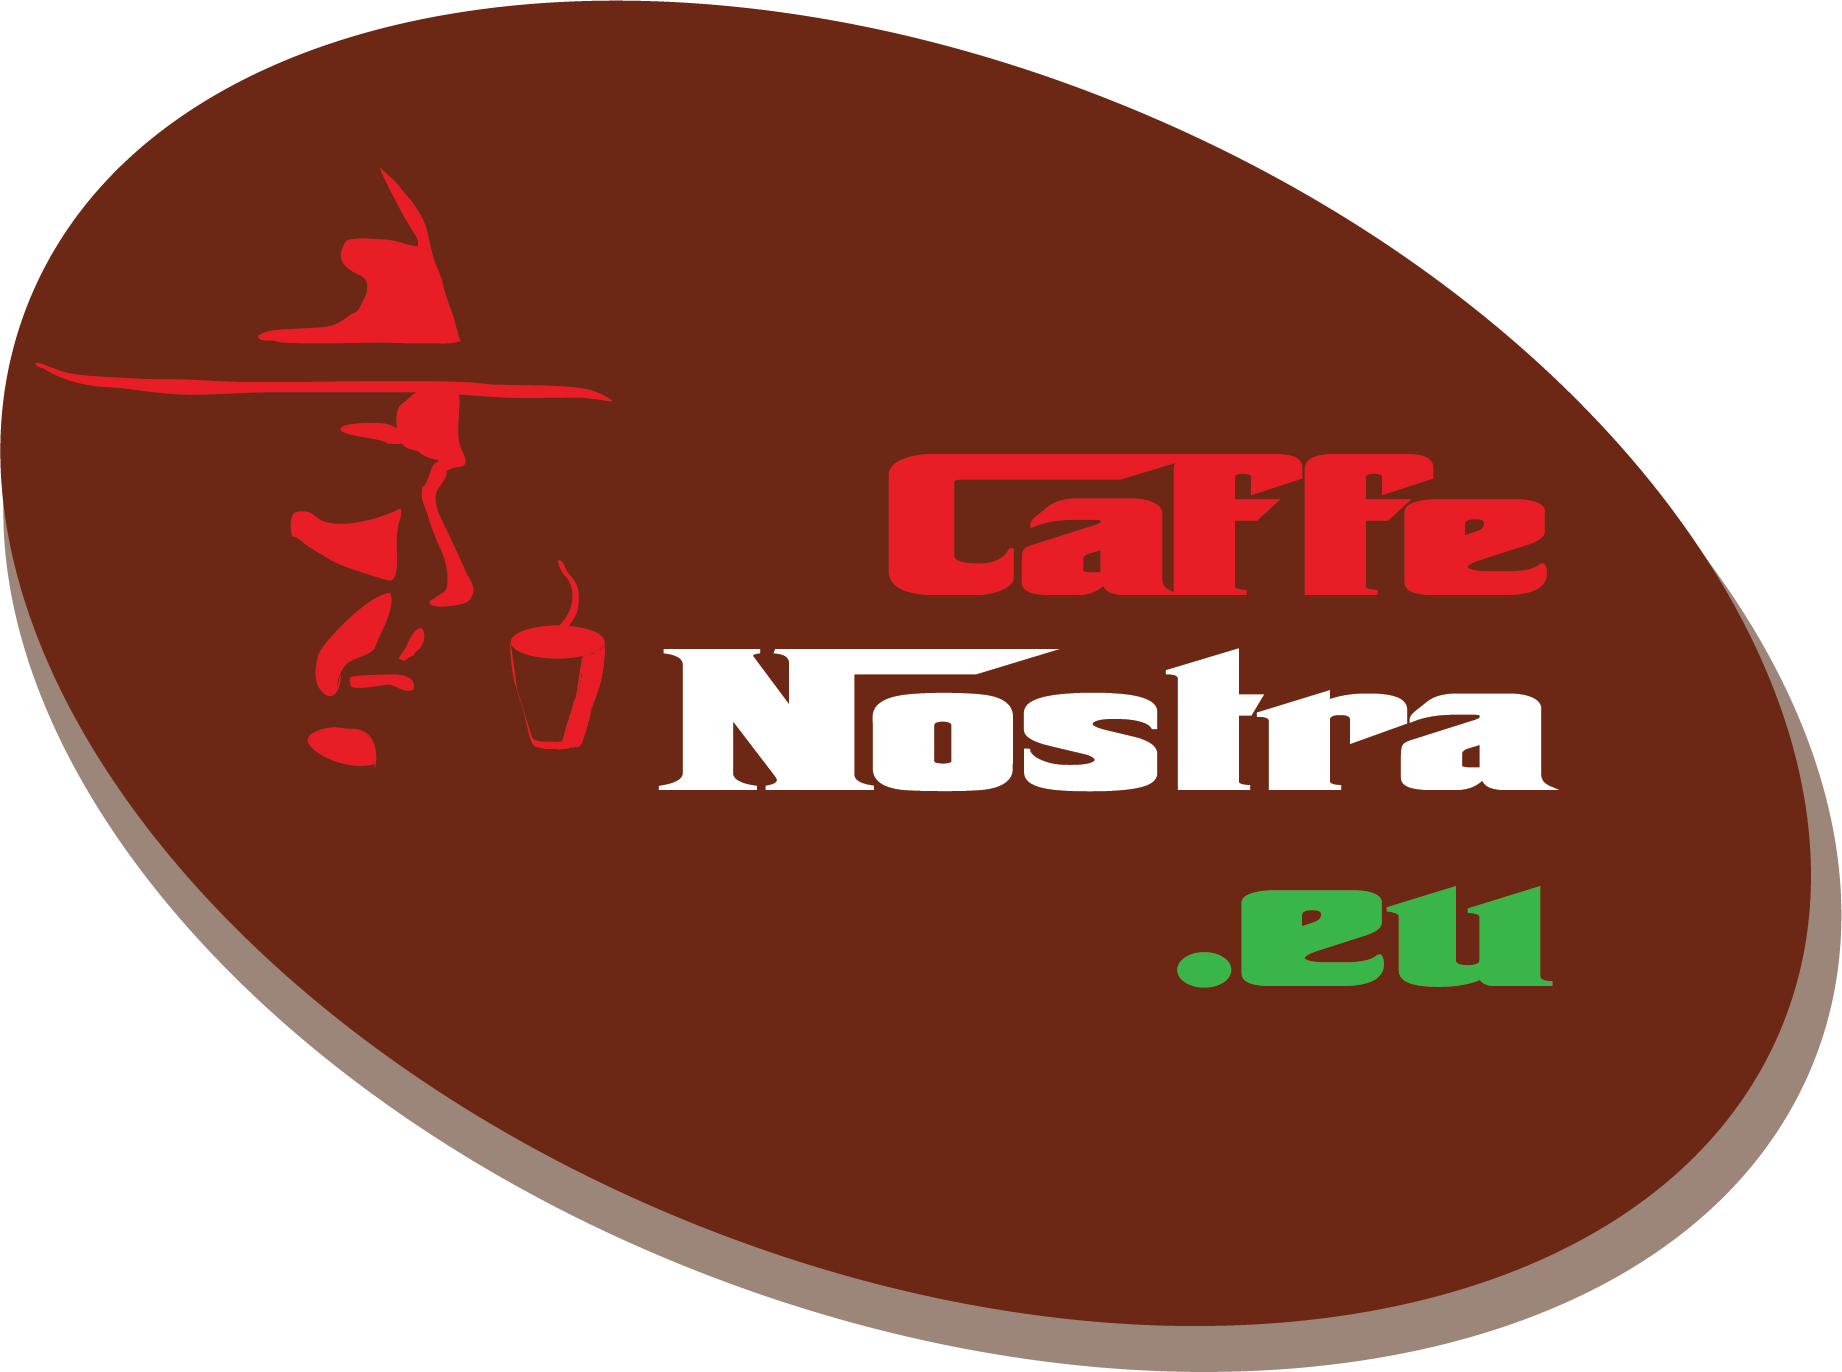 CaffeNostra